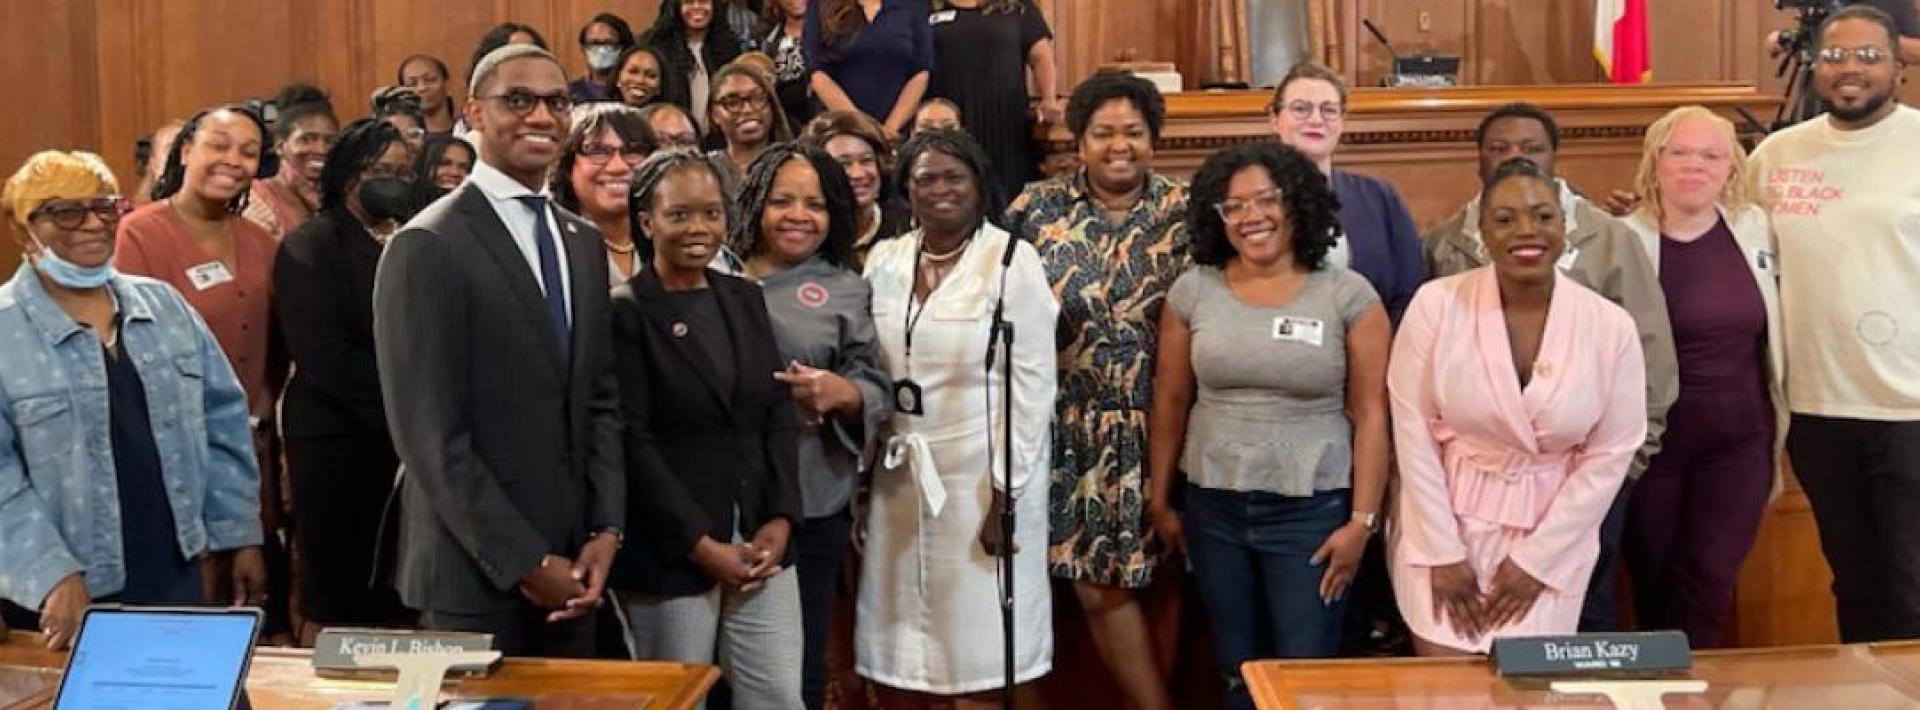 a group of women surround mayor bibb 